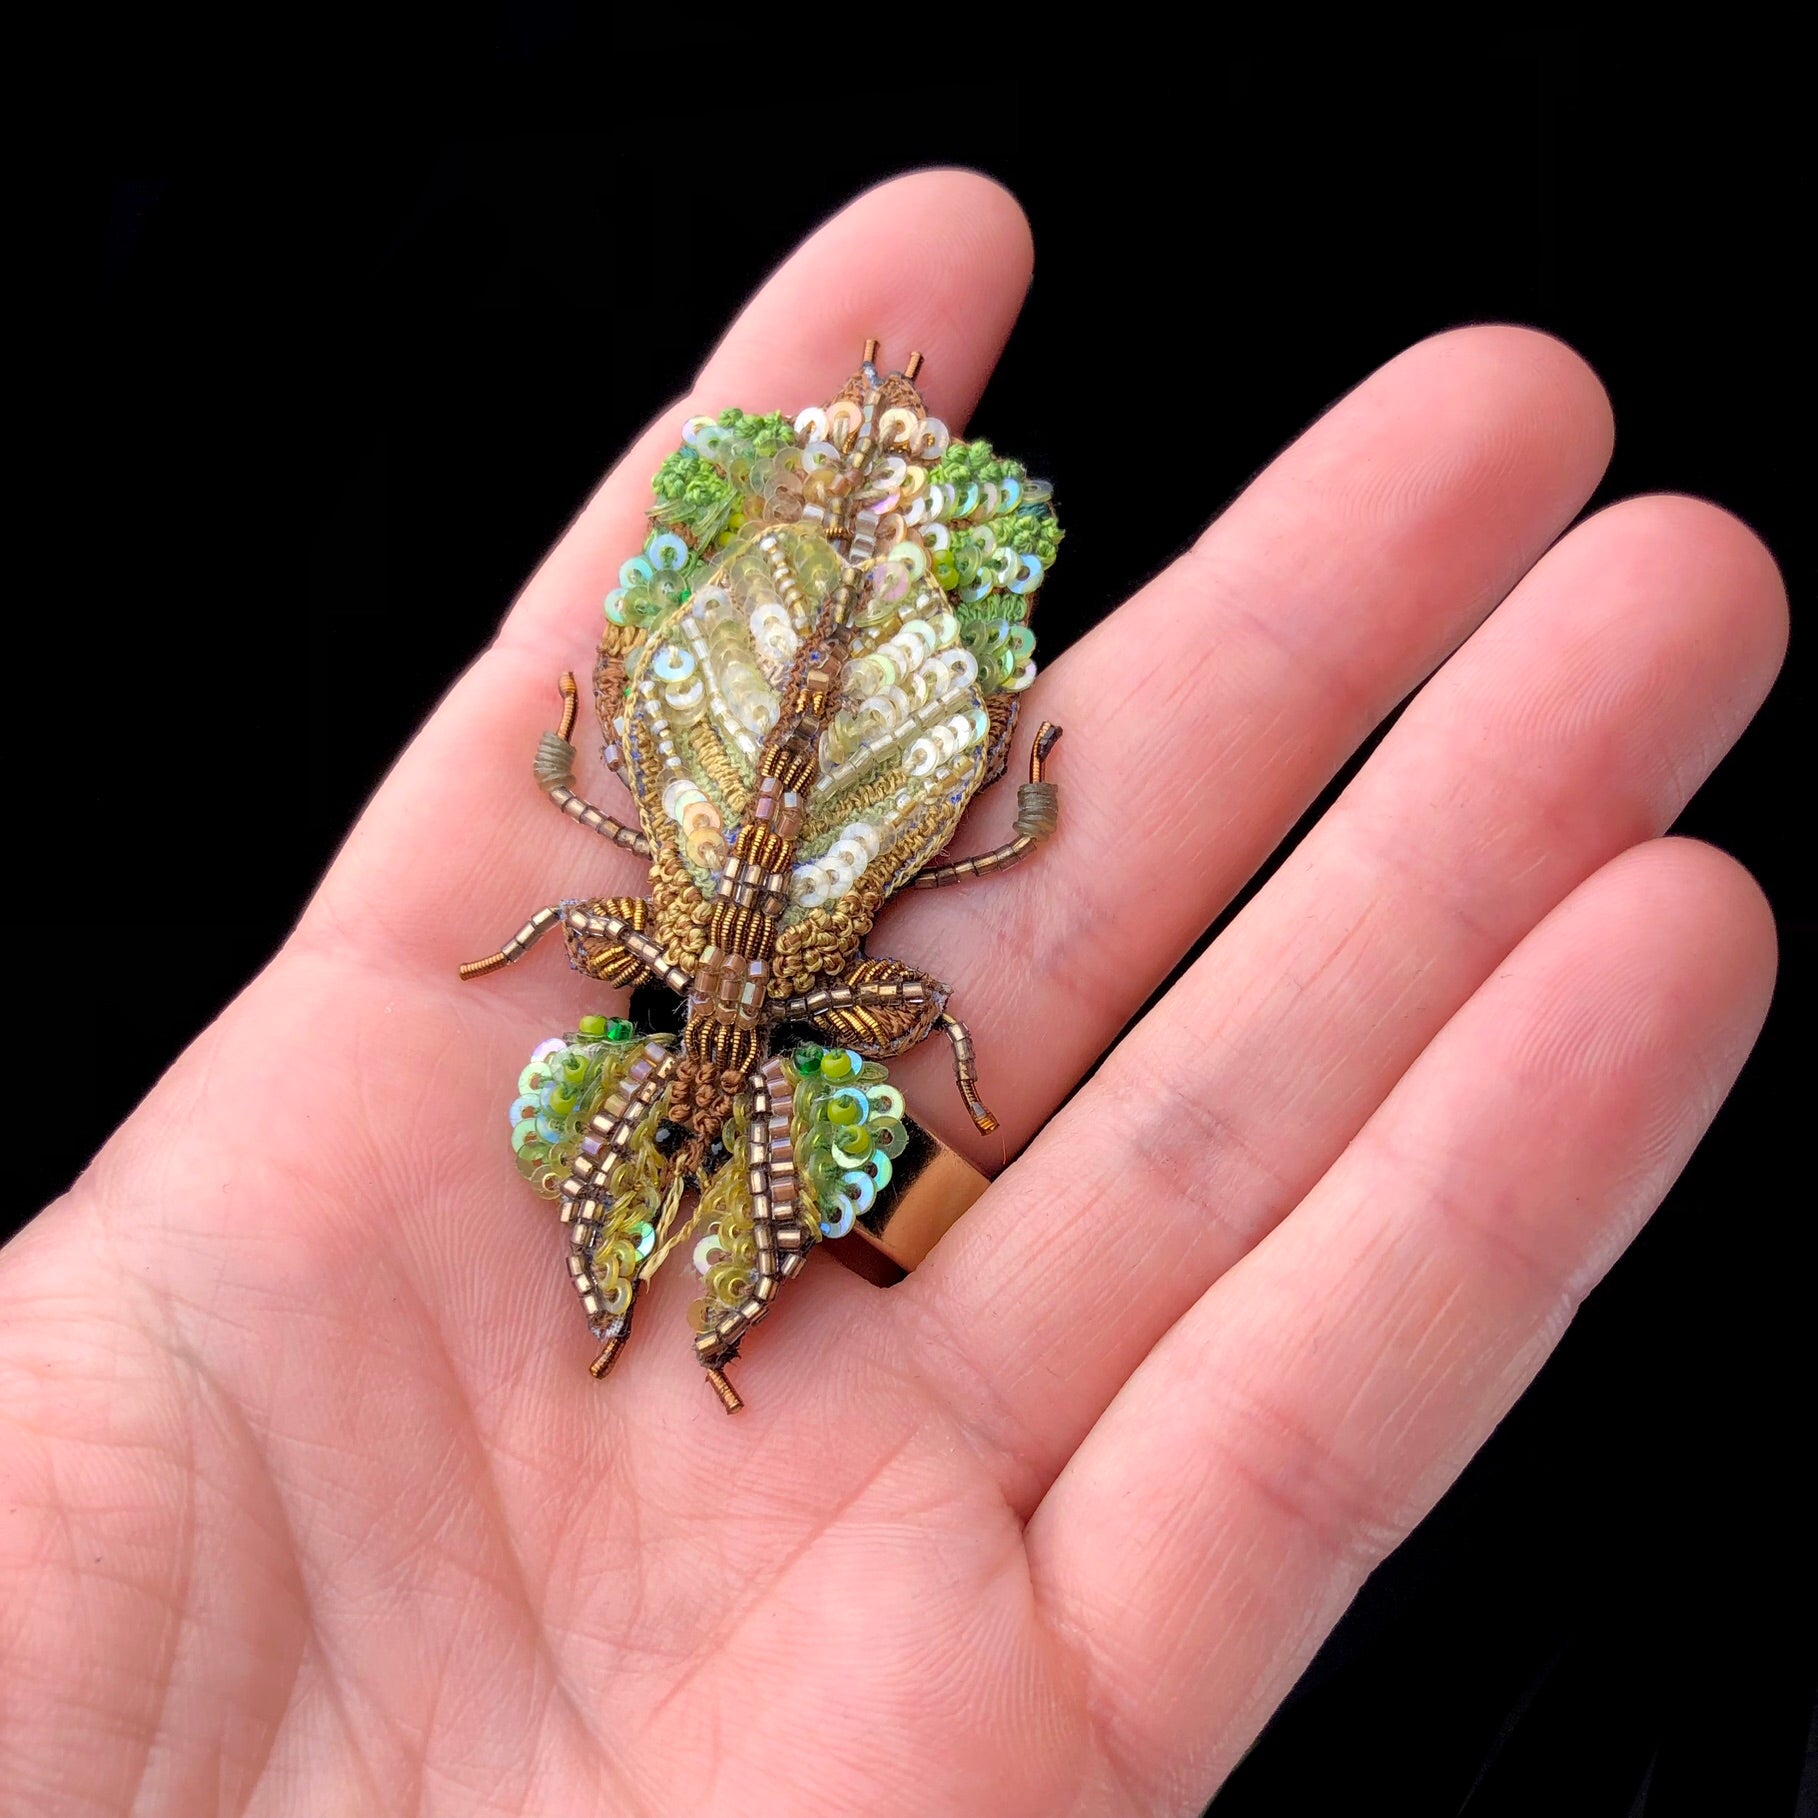 Leaf Bug Pin Brooch shown in hand